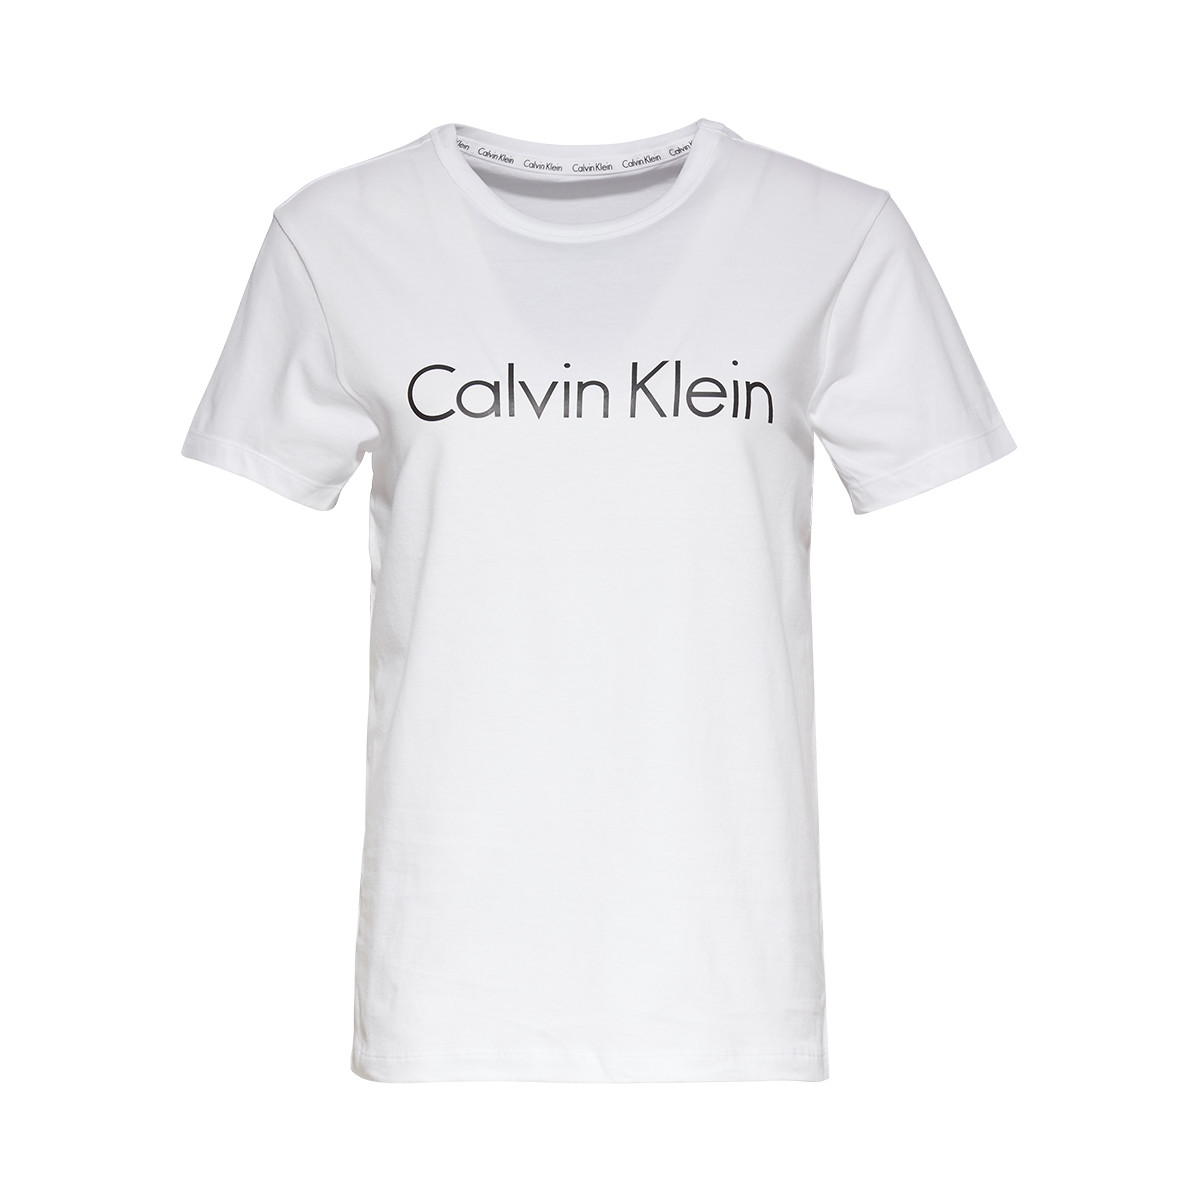 8: Calvin Klein T-shirt, Farve: Hvid, Størrelse: XS, Dame